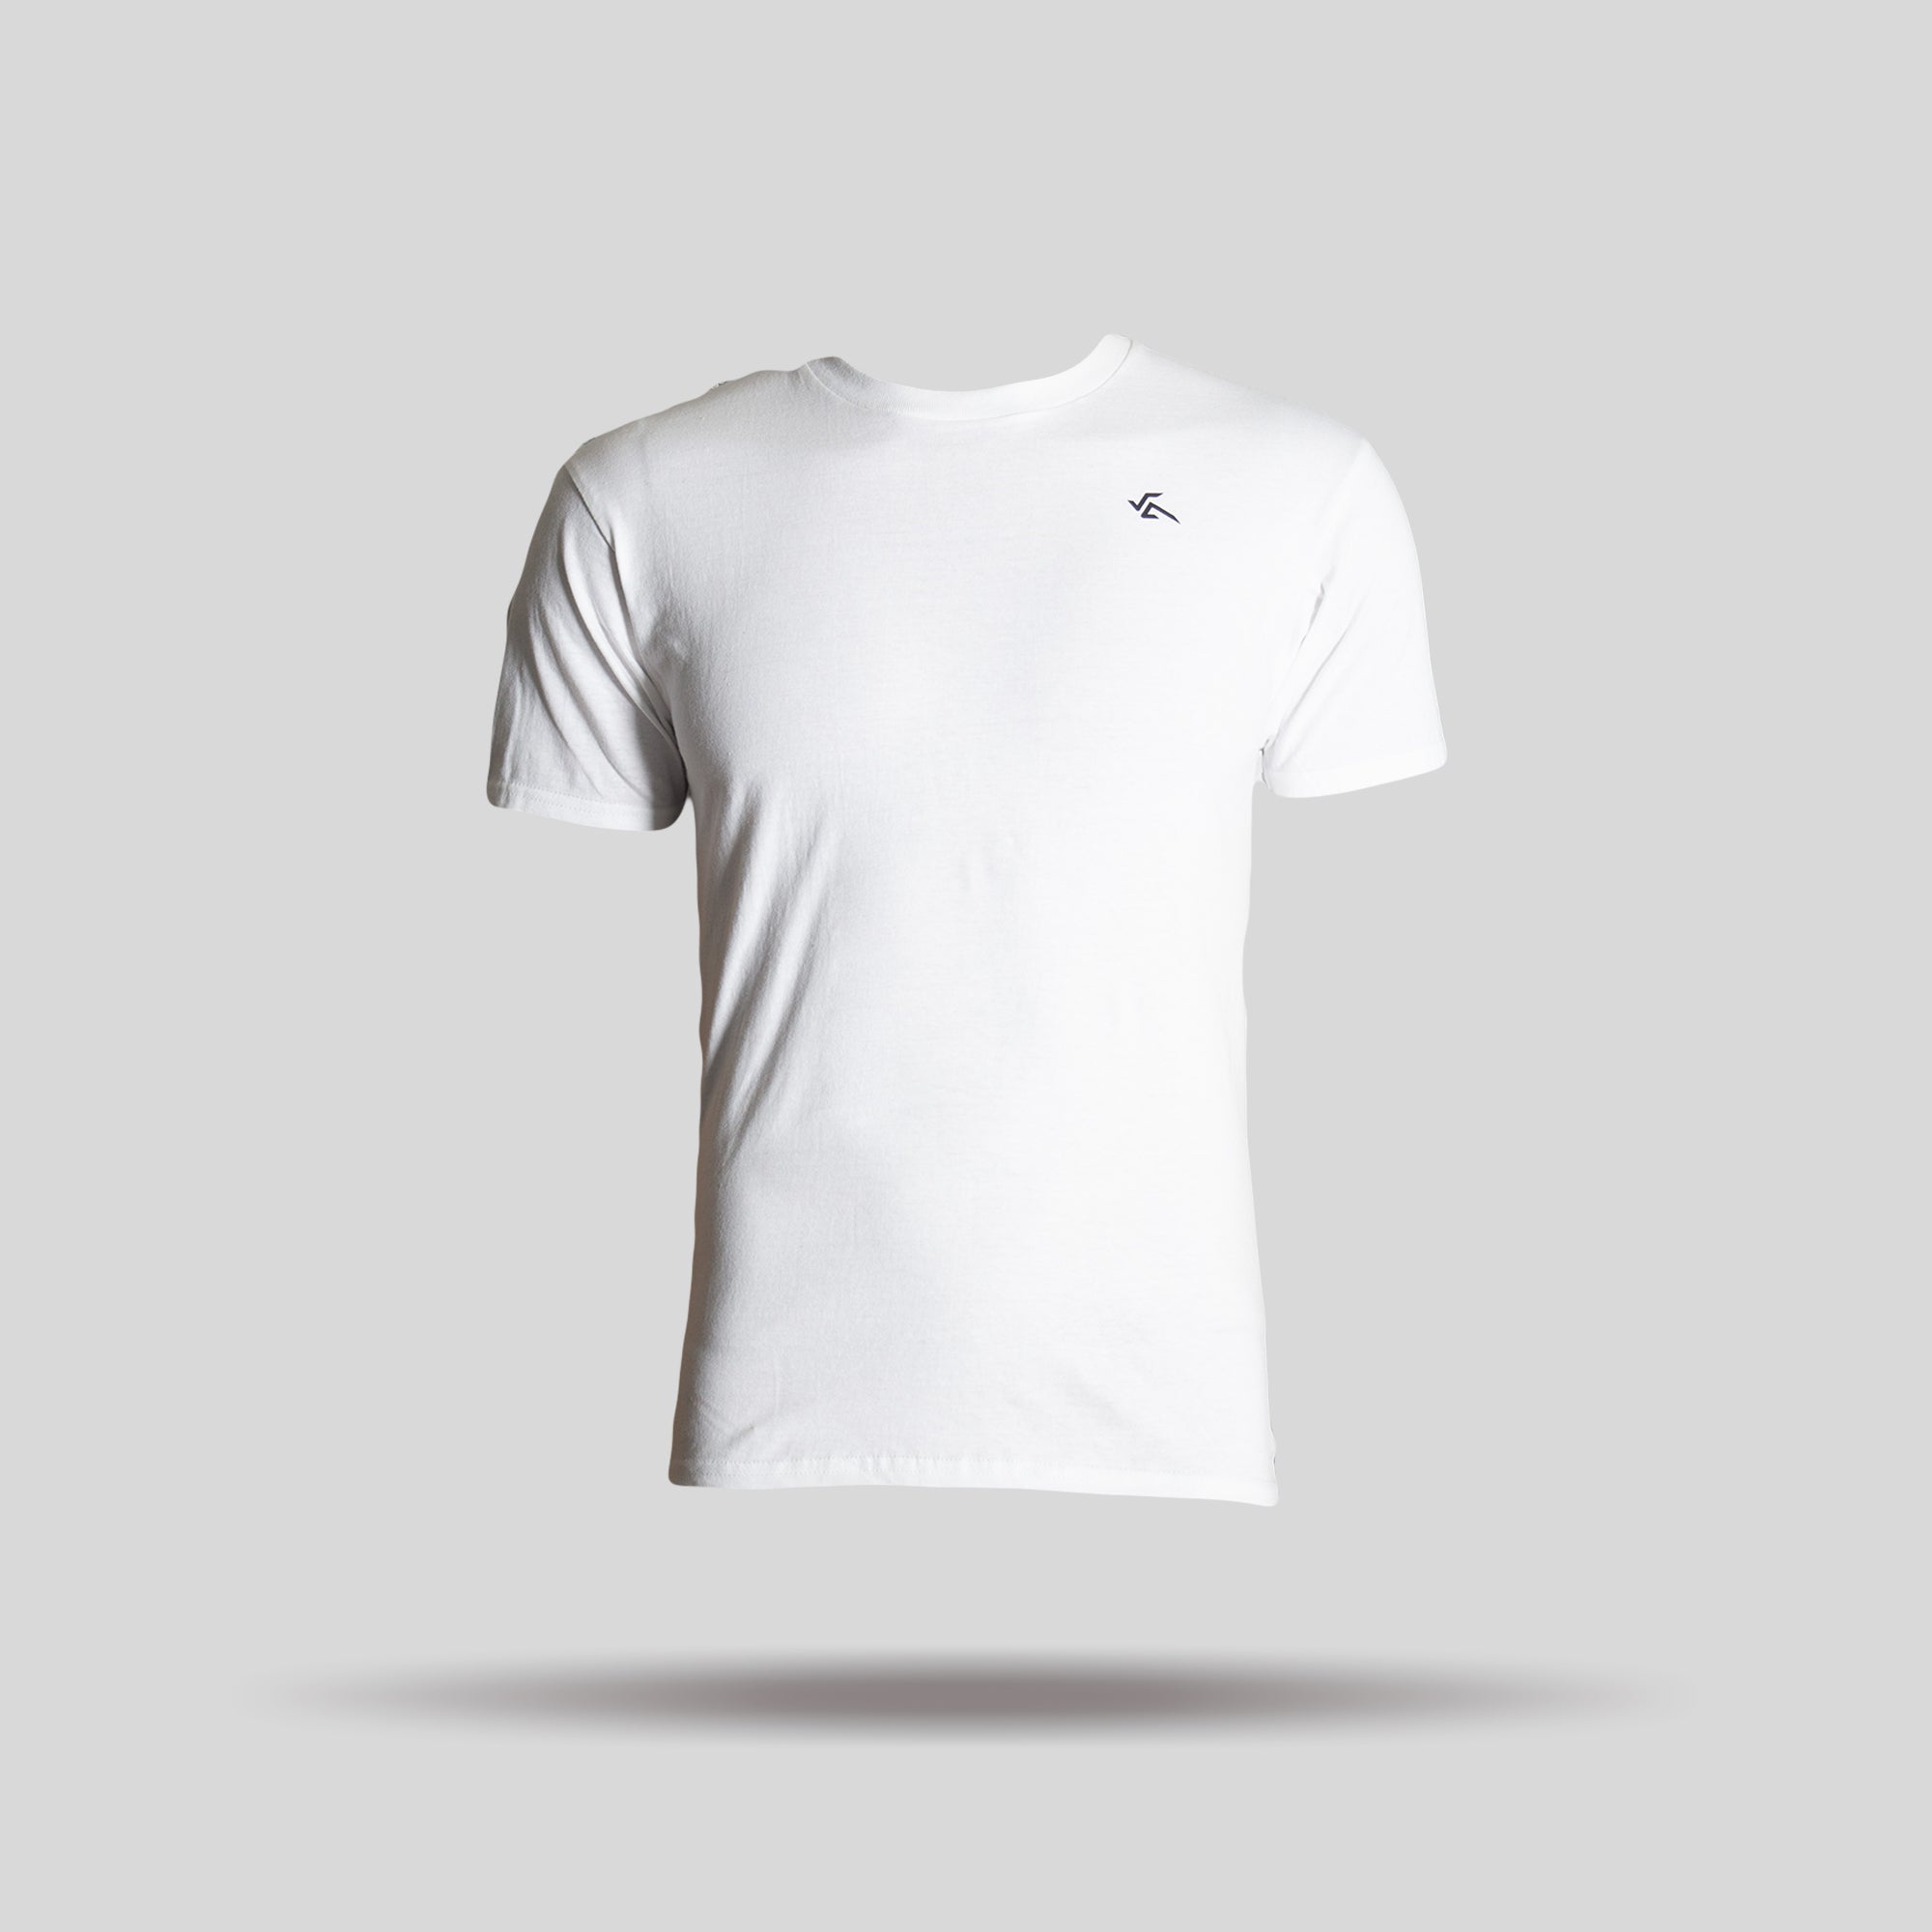 VA Cotton T-shirt